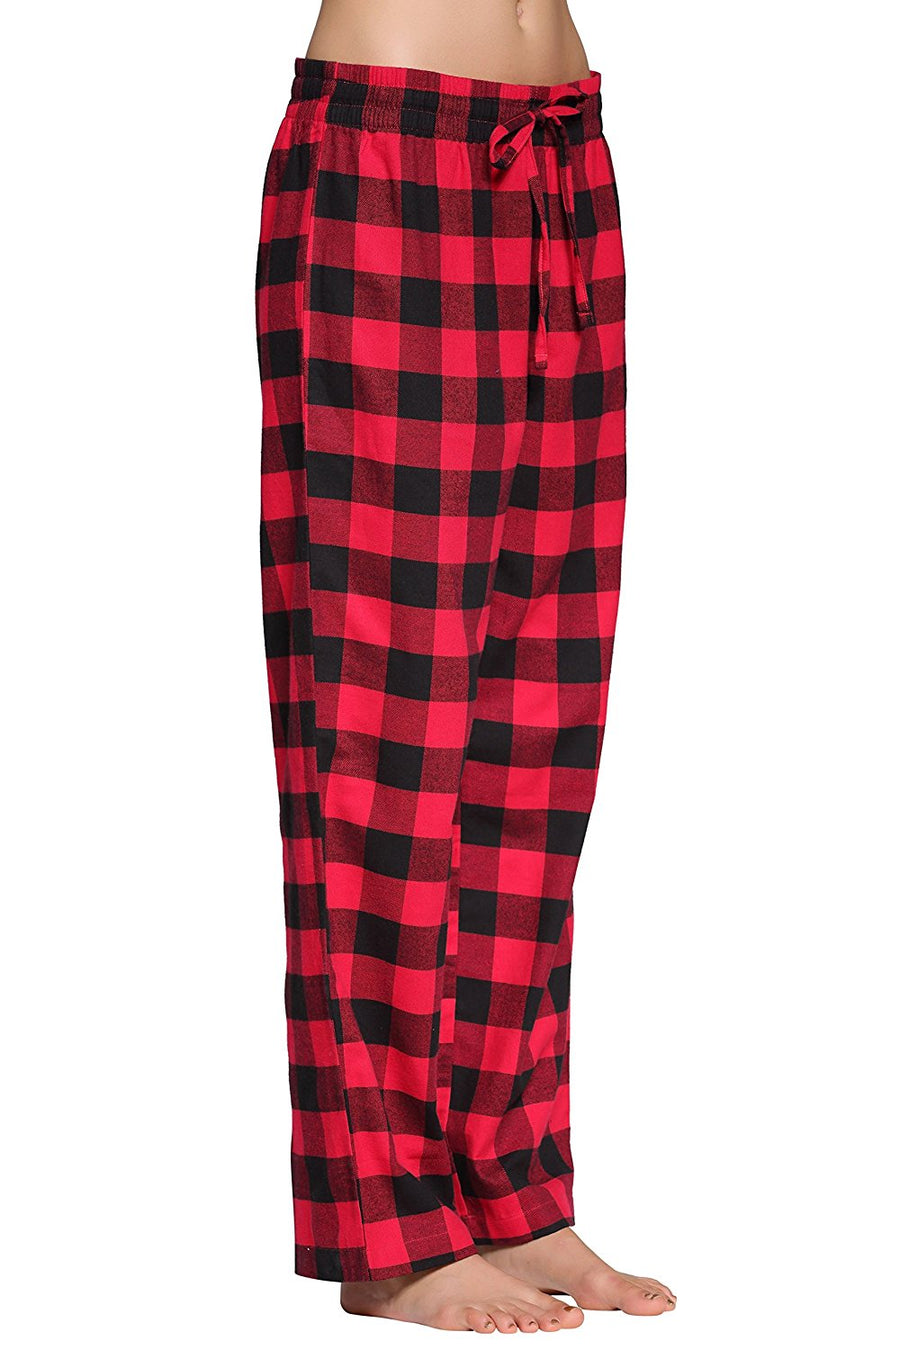 Buffalo Plaid Hot Pink Pajama Pants For Women Soft Womens Pjs